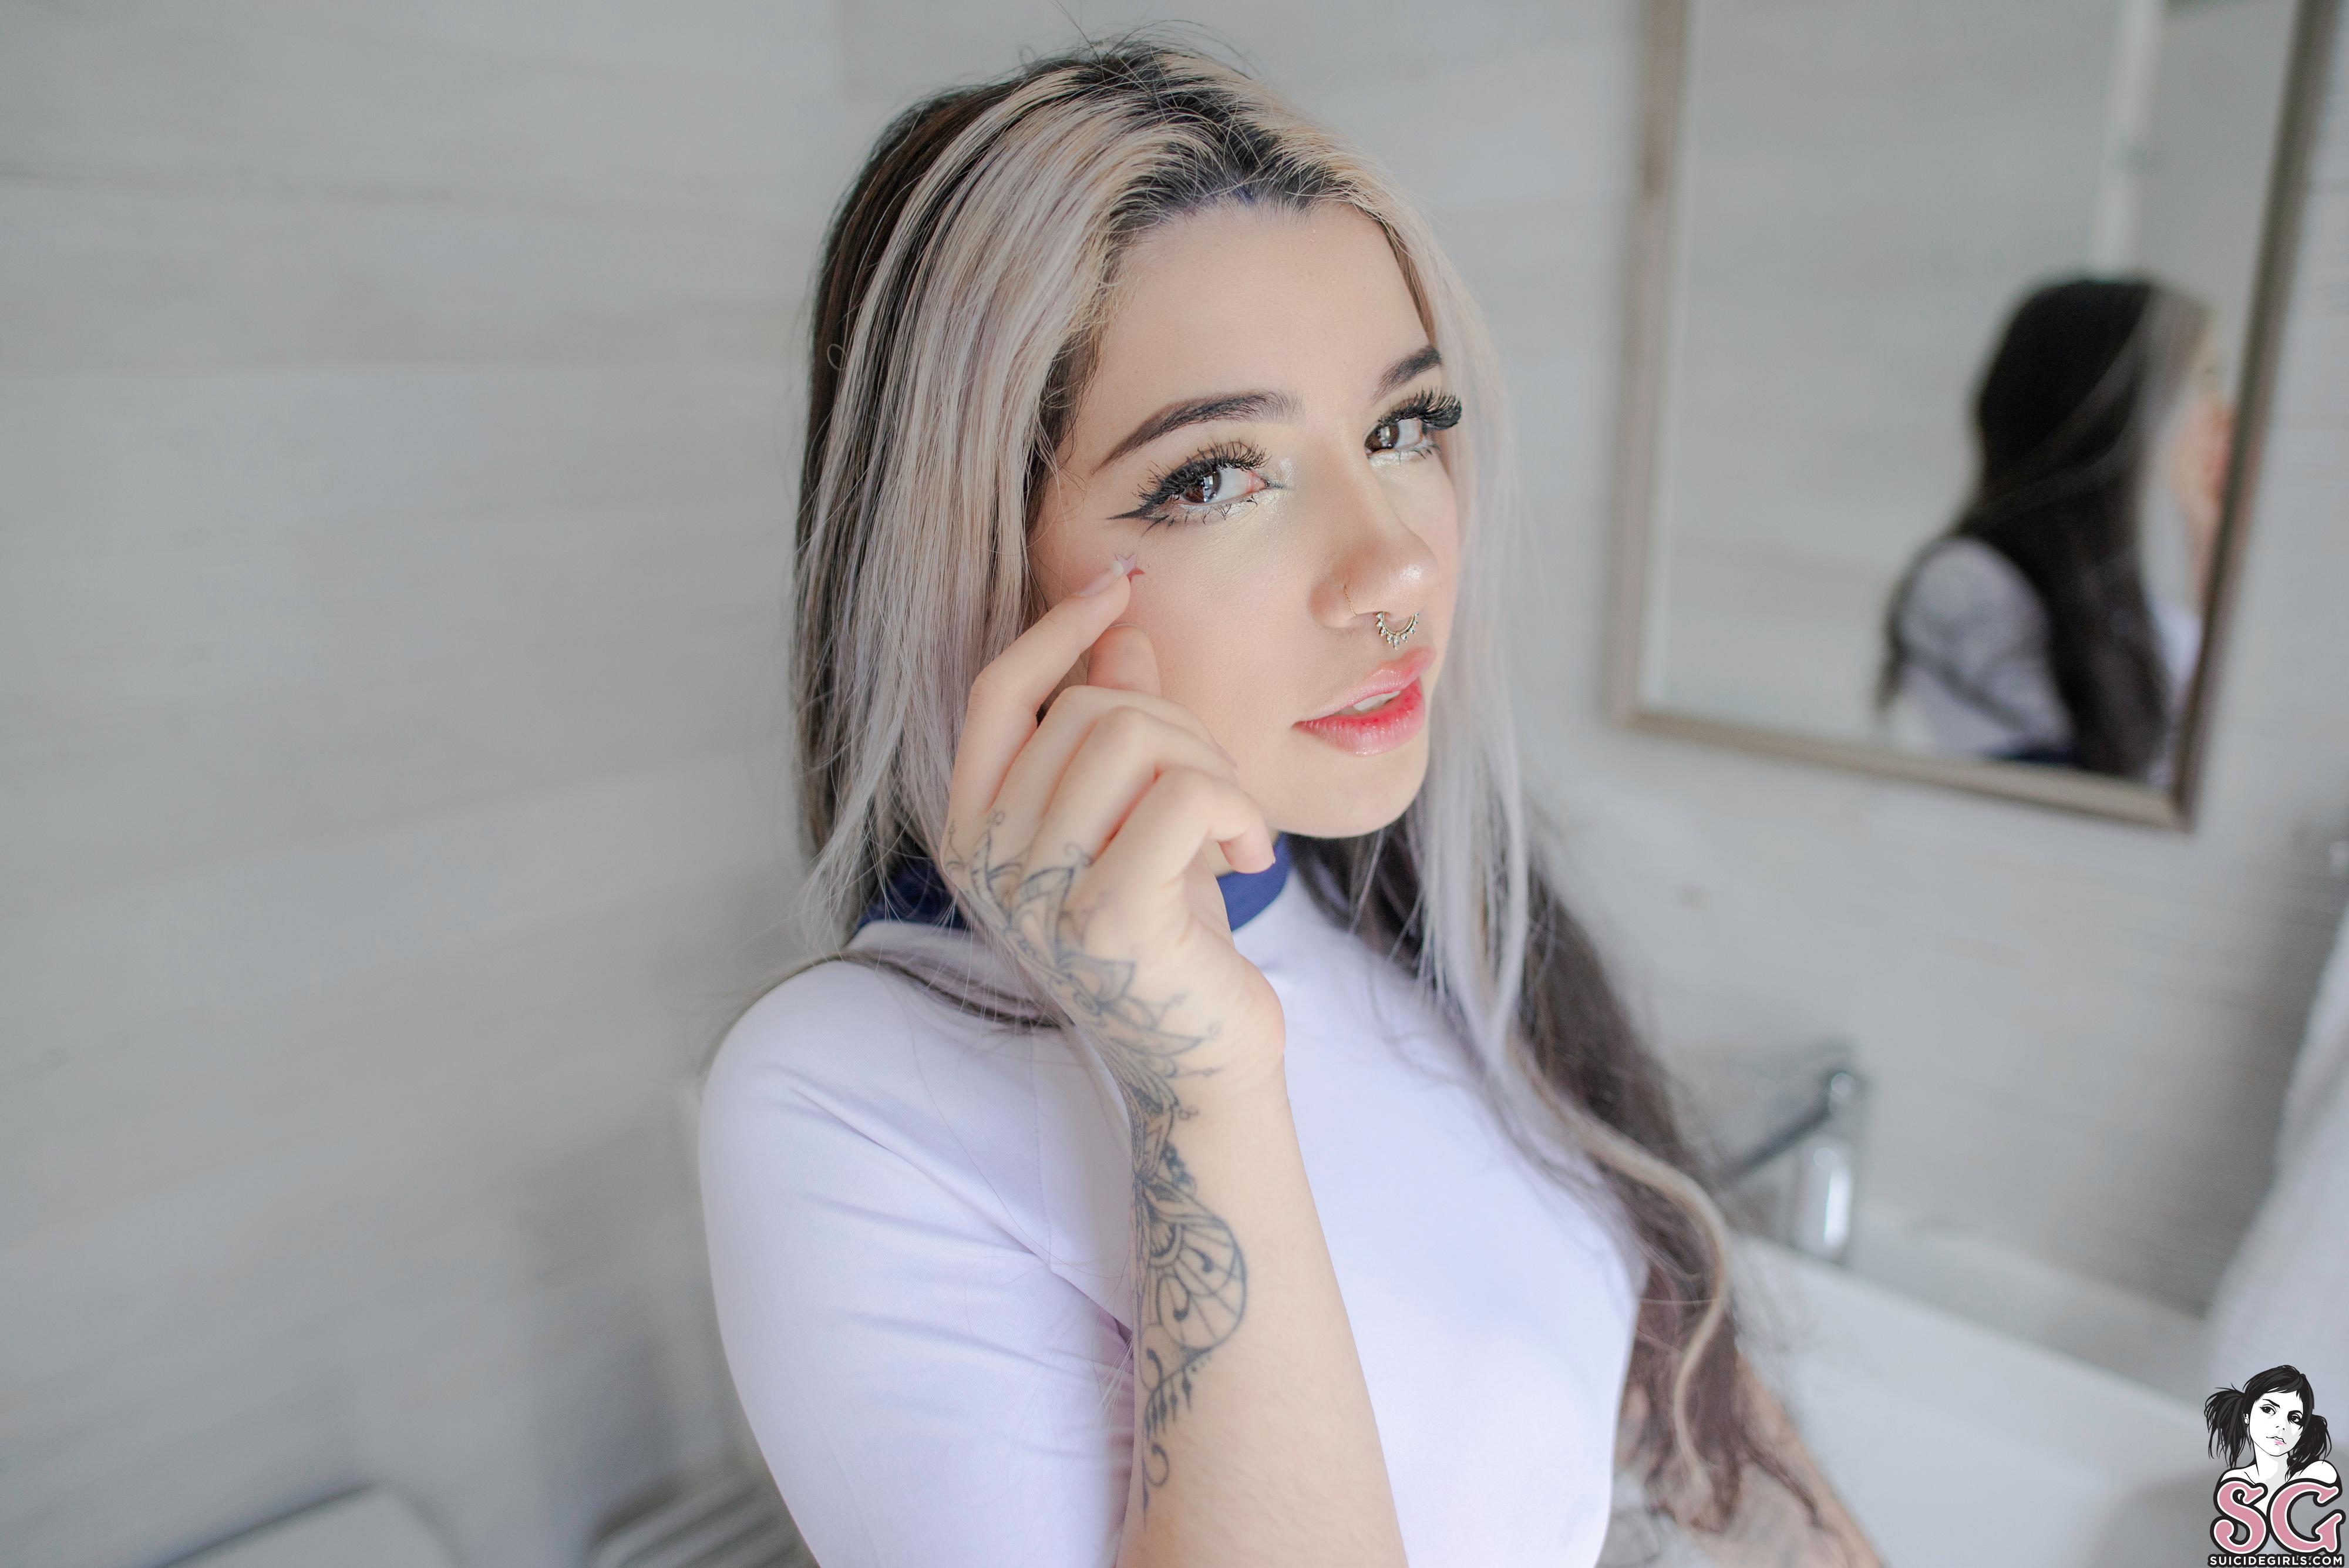 Model Brazilian Dyed Hair Tattoo Women Bathroom Face Pierced Nose Bokeh Reflection Brown Eyes Eyelas 4000x2670